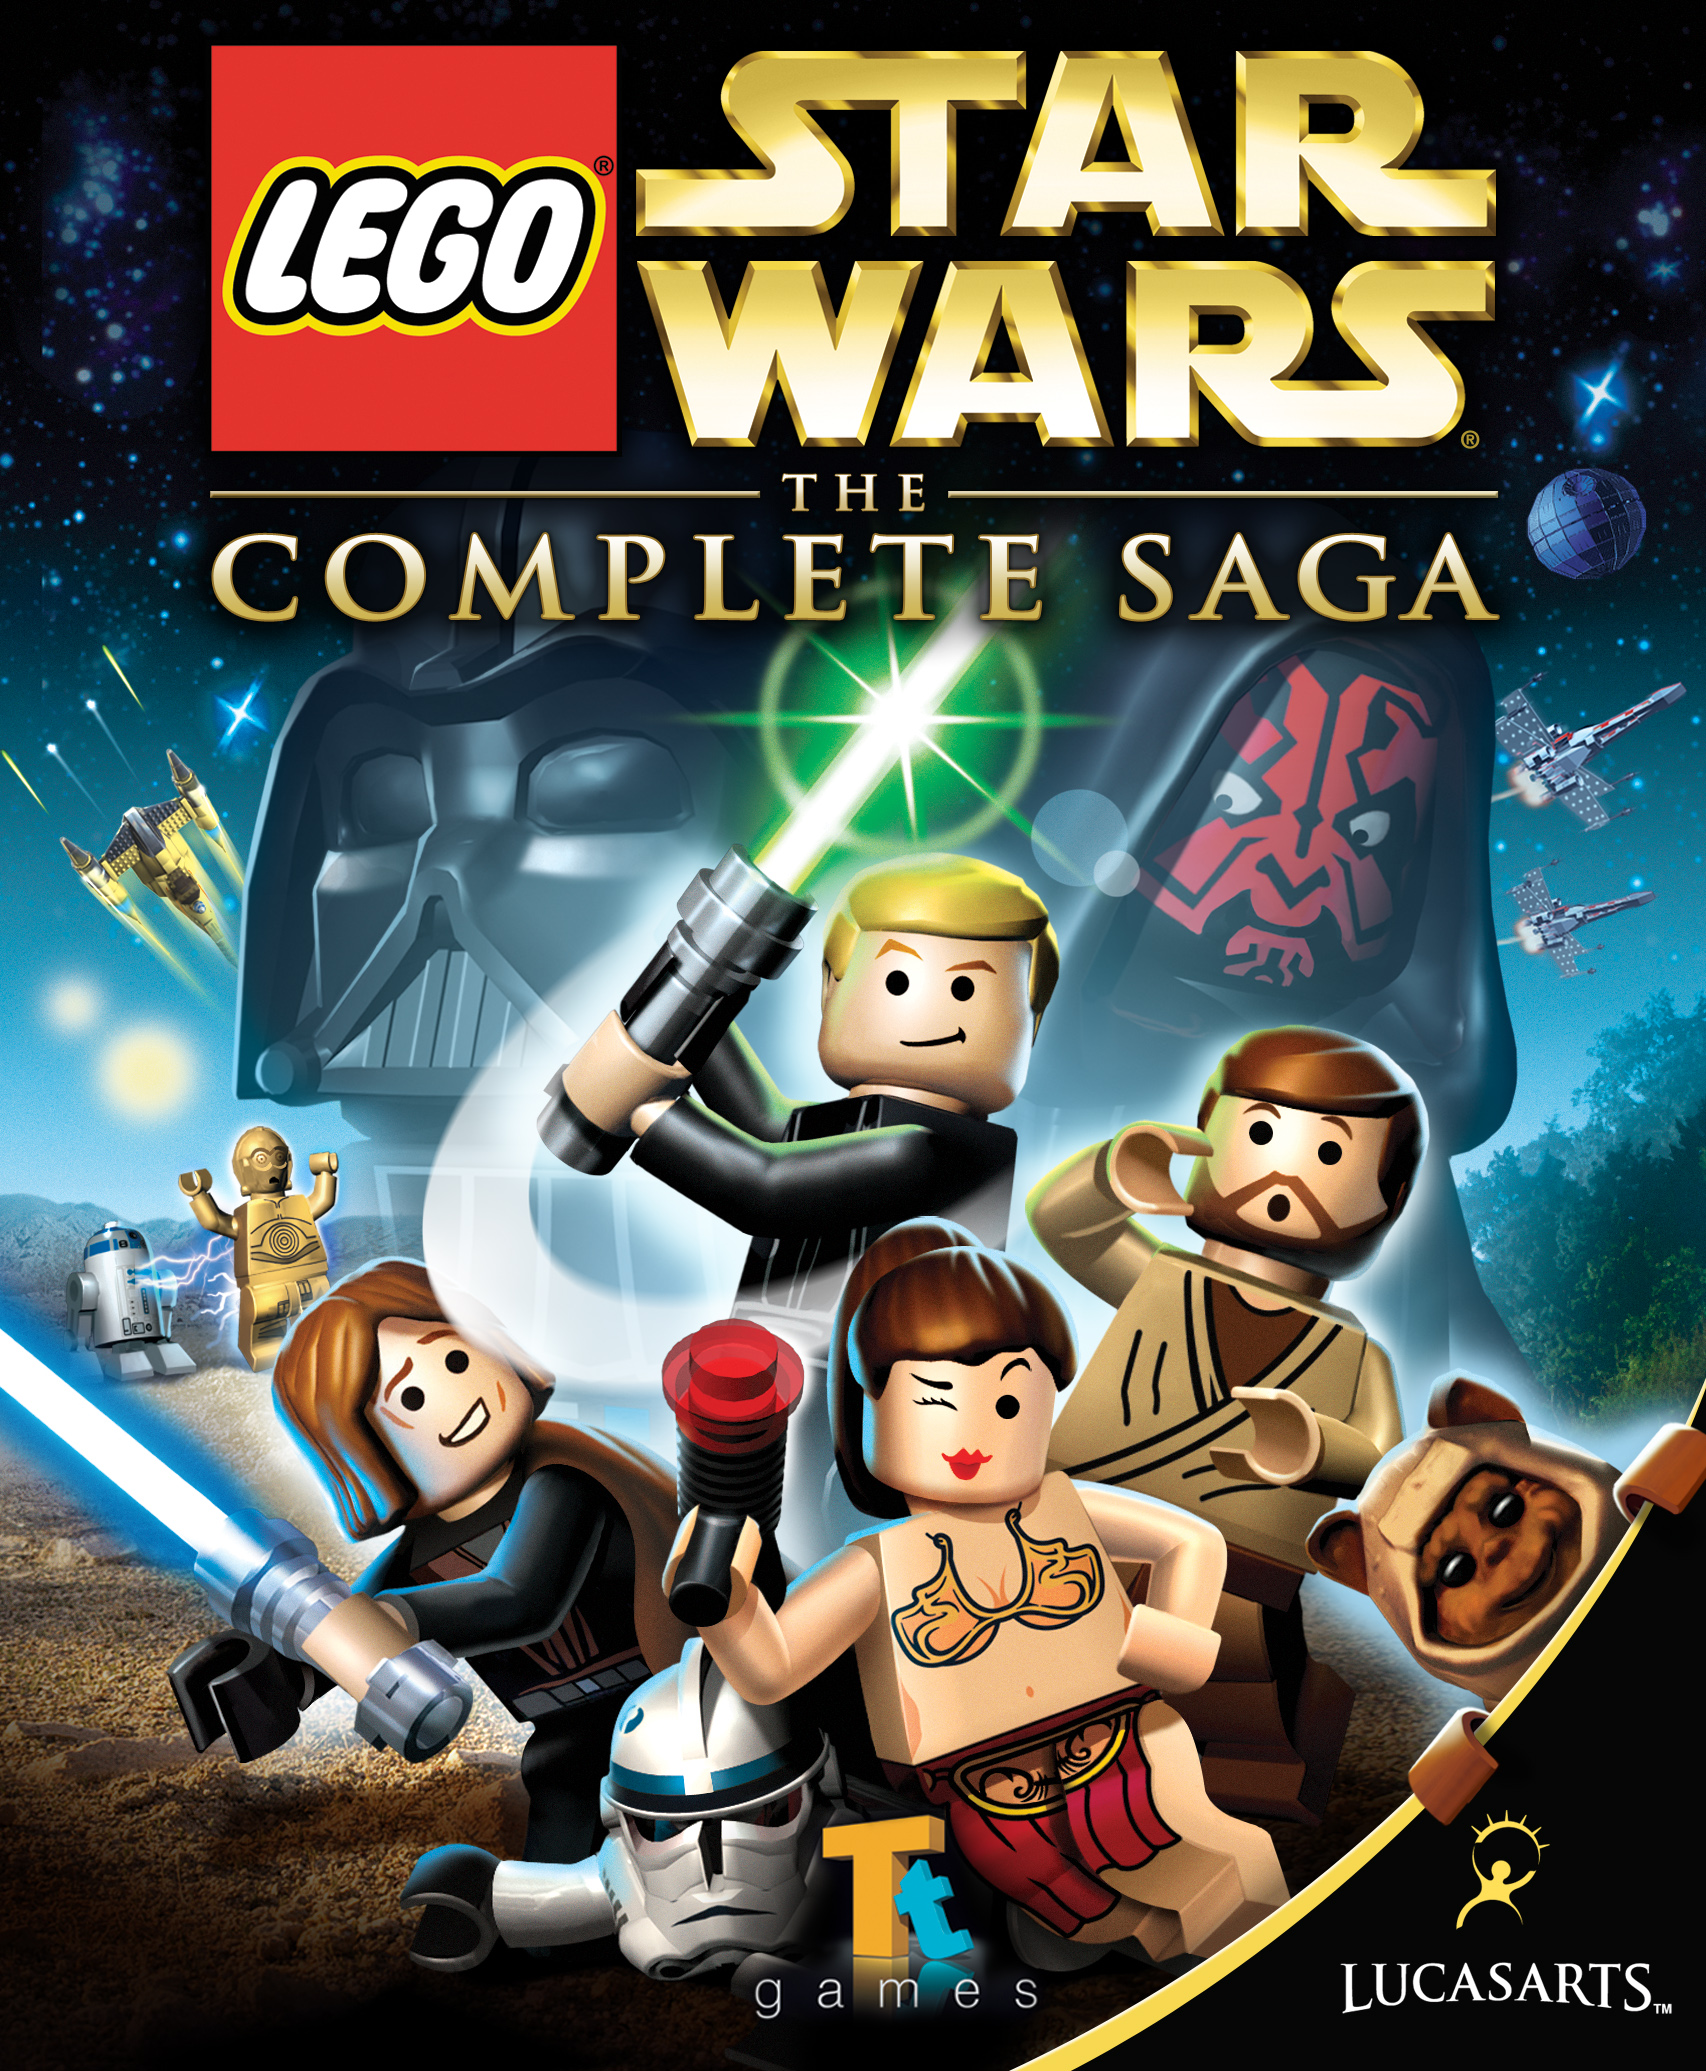 Custom Star Wars minifigures Ponda Baba Complete Saga on lego brand bricks 